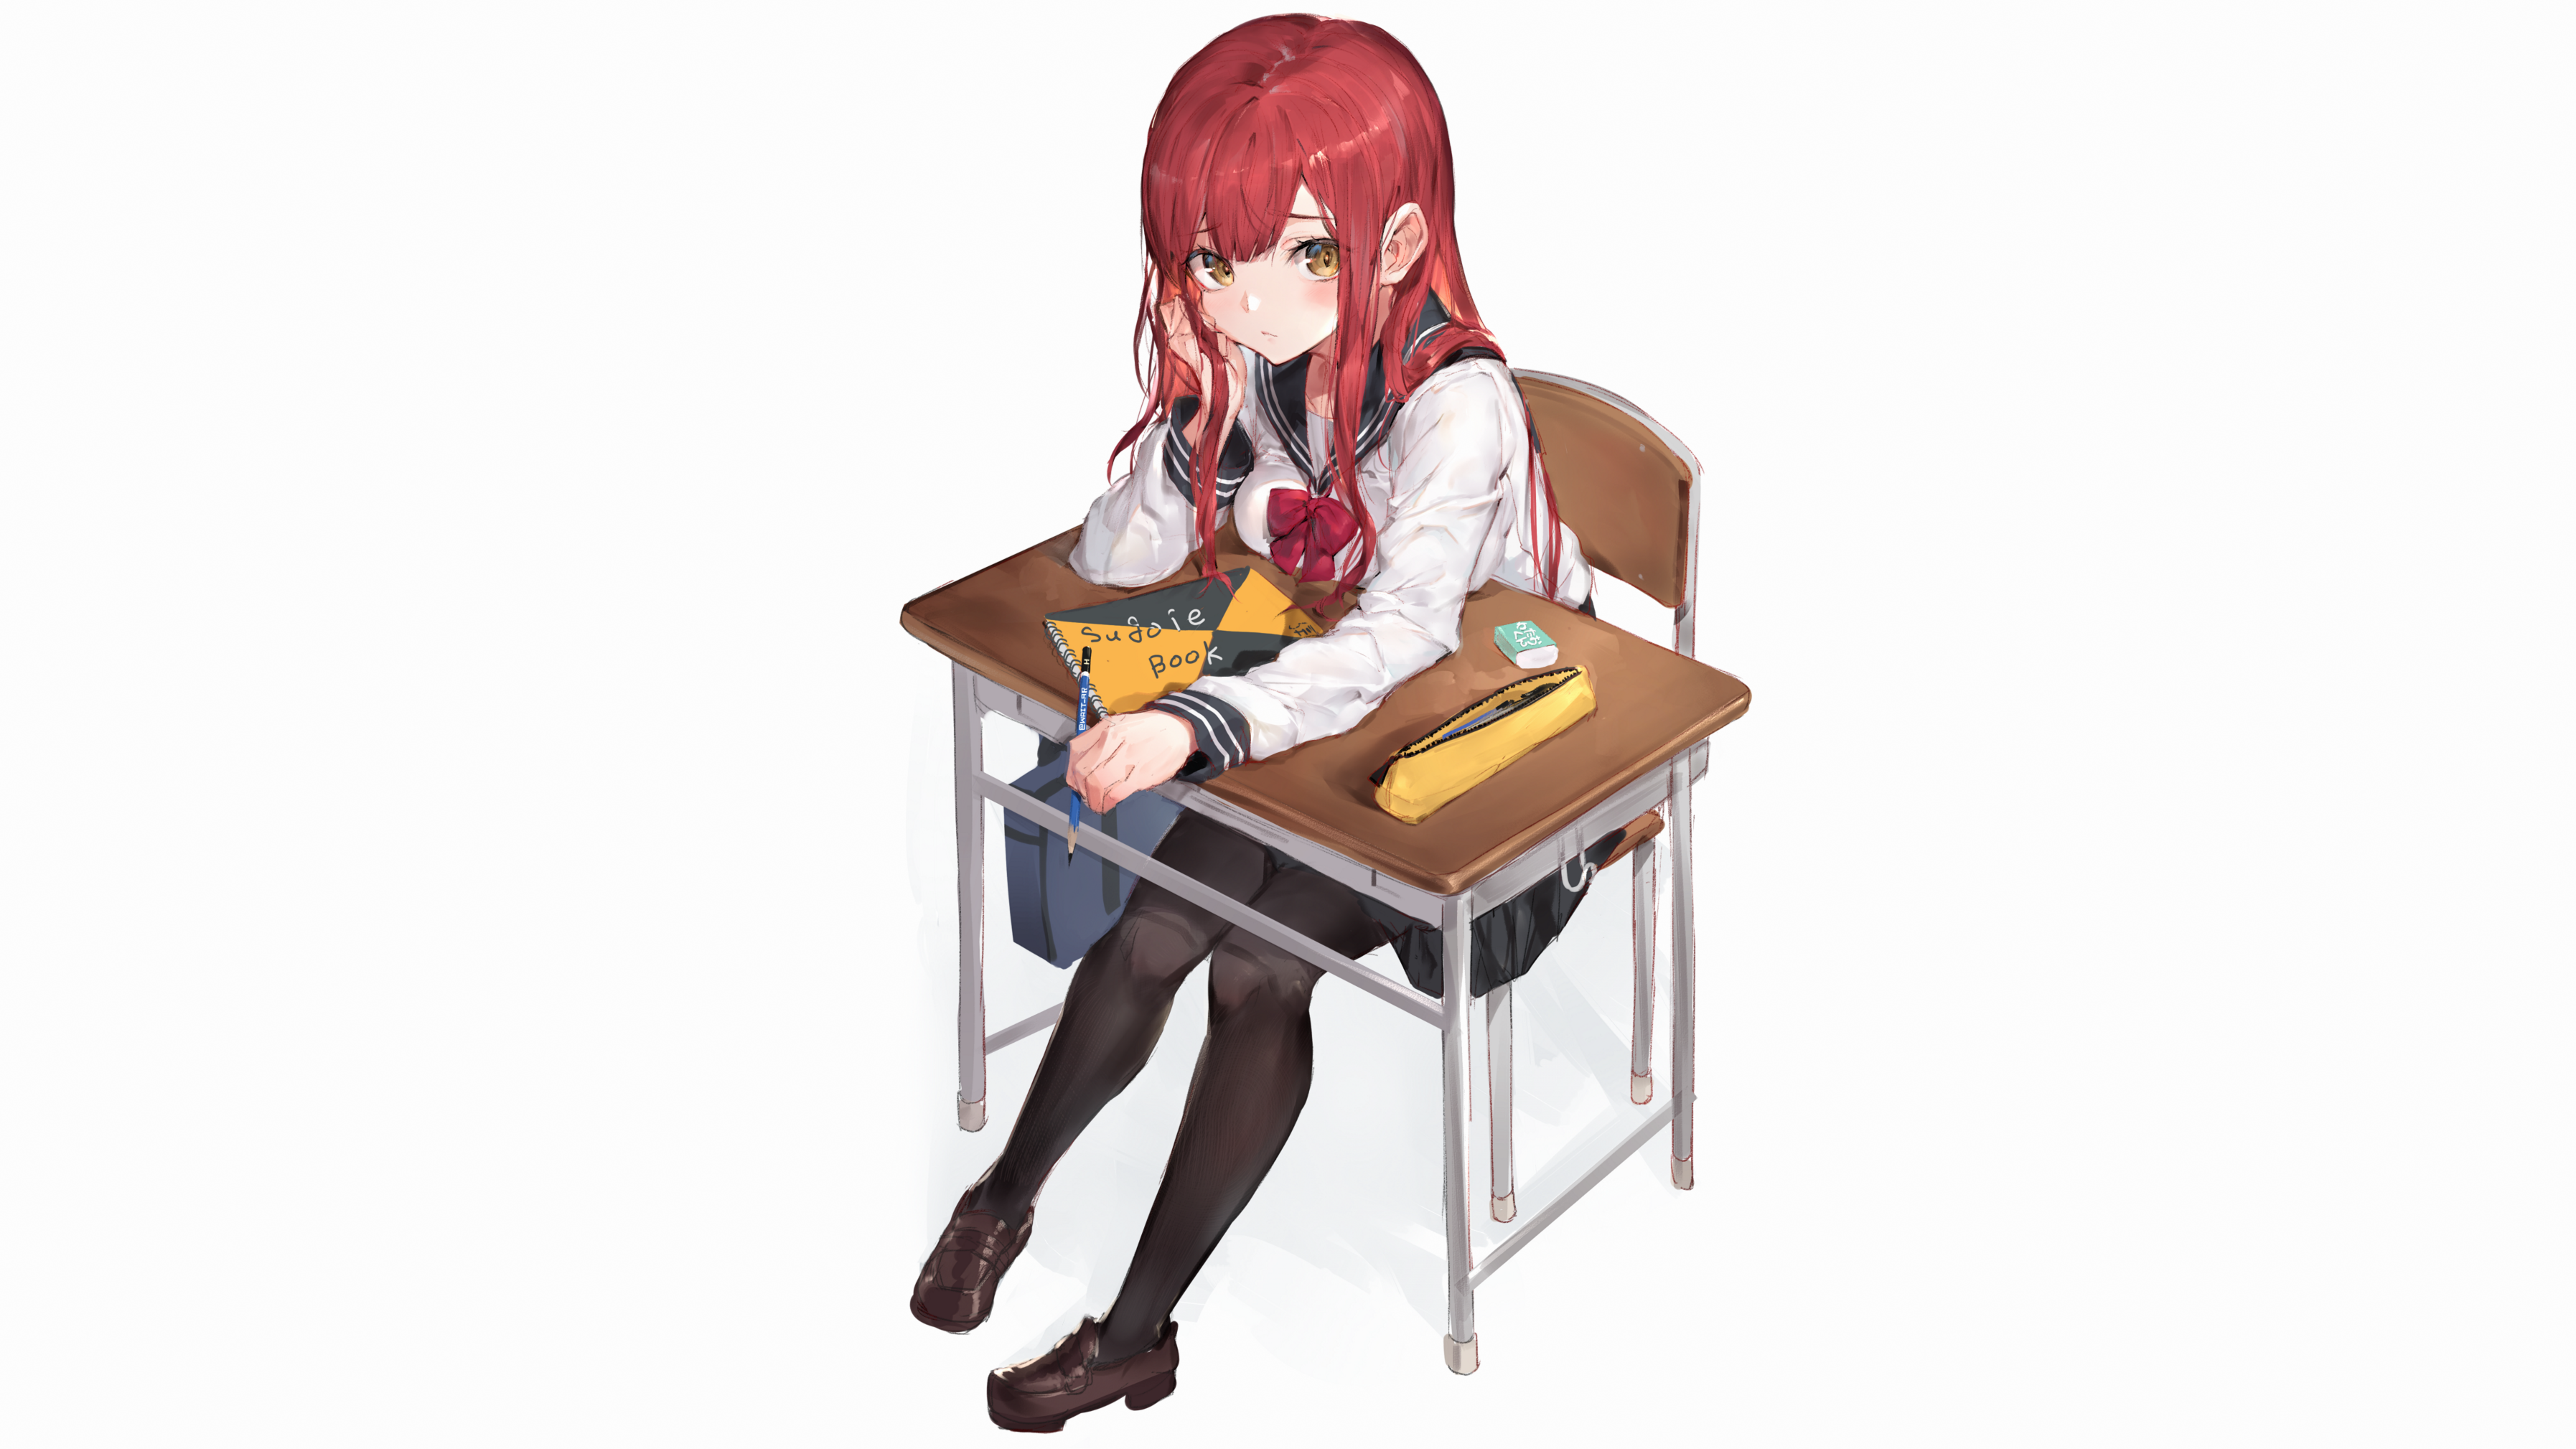 Anime 3589x2019 anime girls original characters redhead long hair looking at viewer schoolgirl school uniform sailor uniform sitting desk chair artwork 2D Wait_ar anime